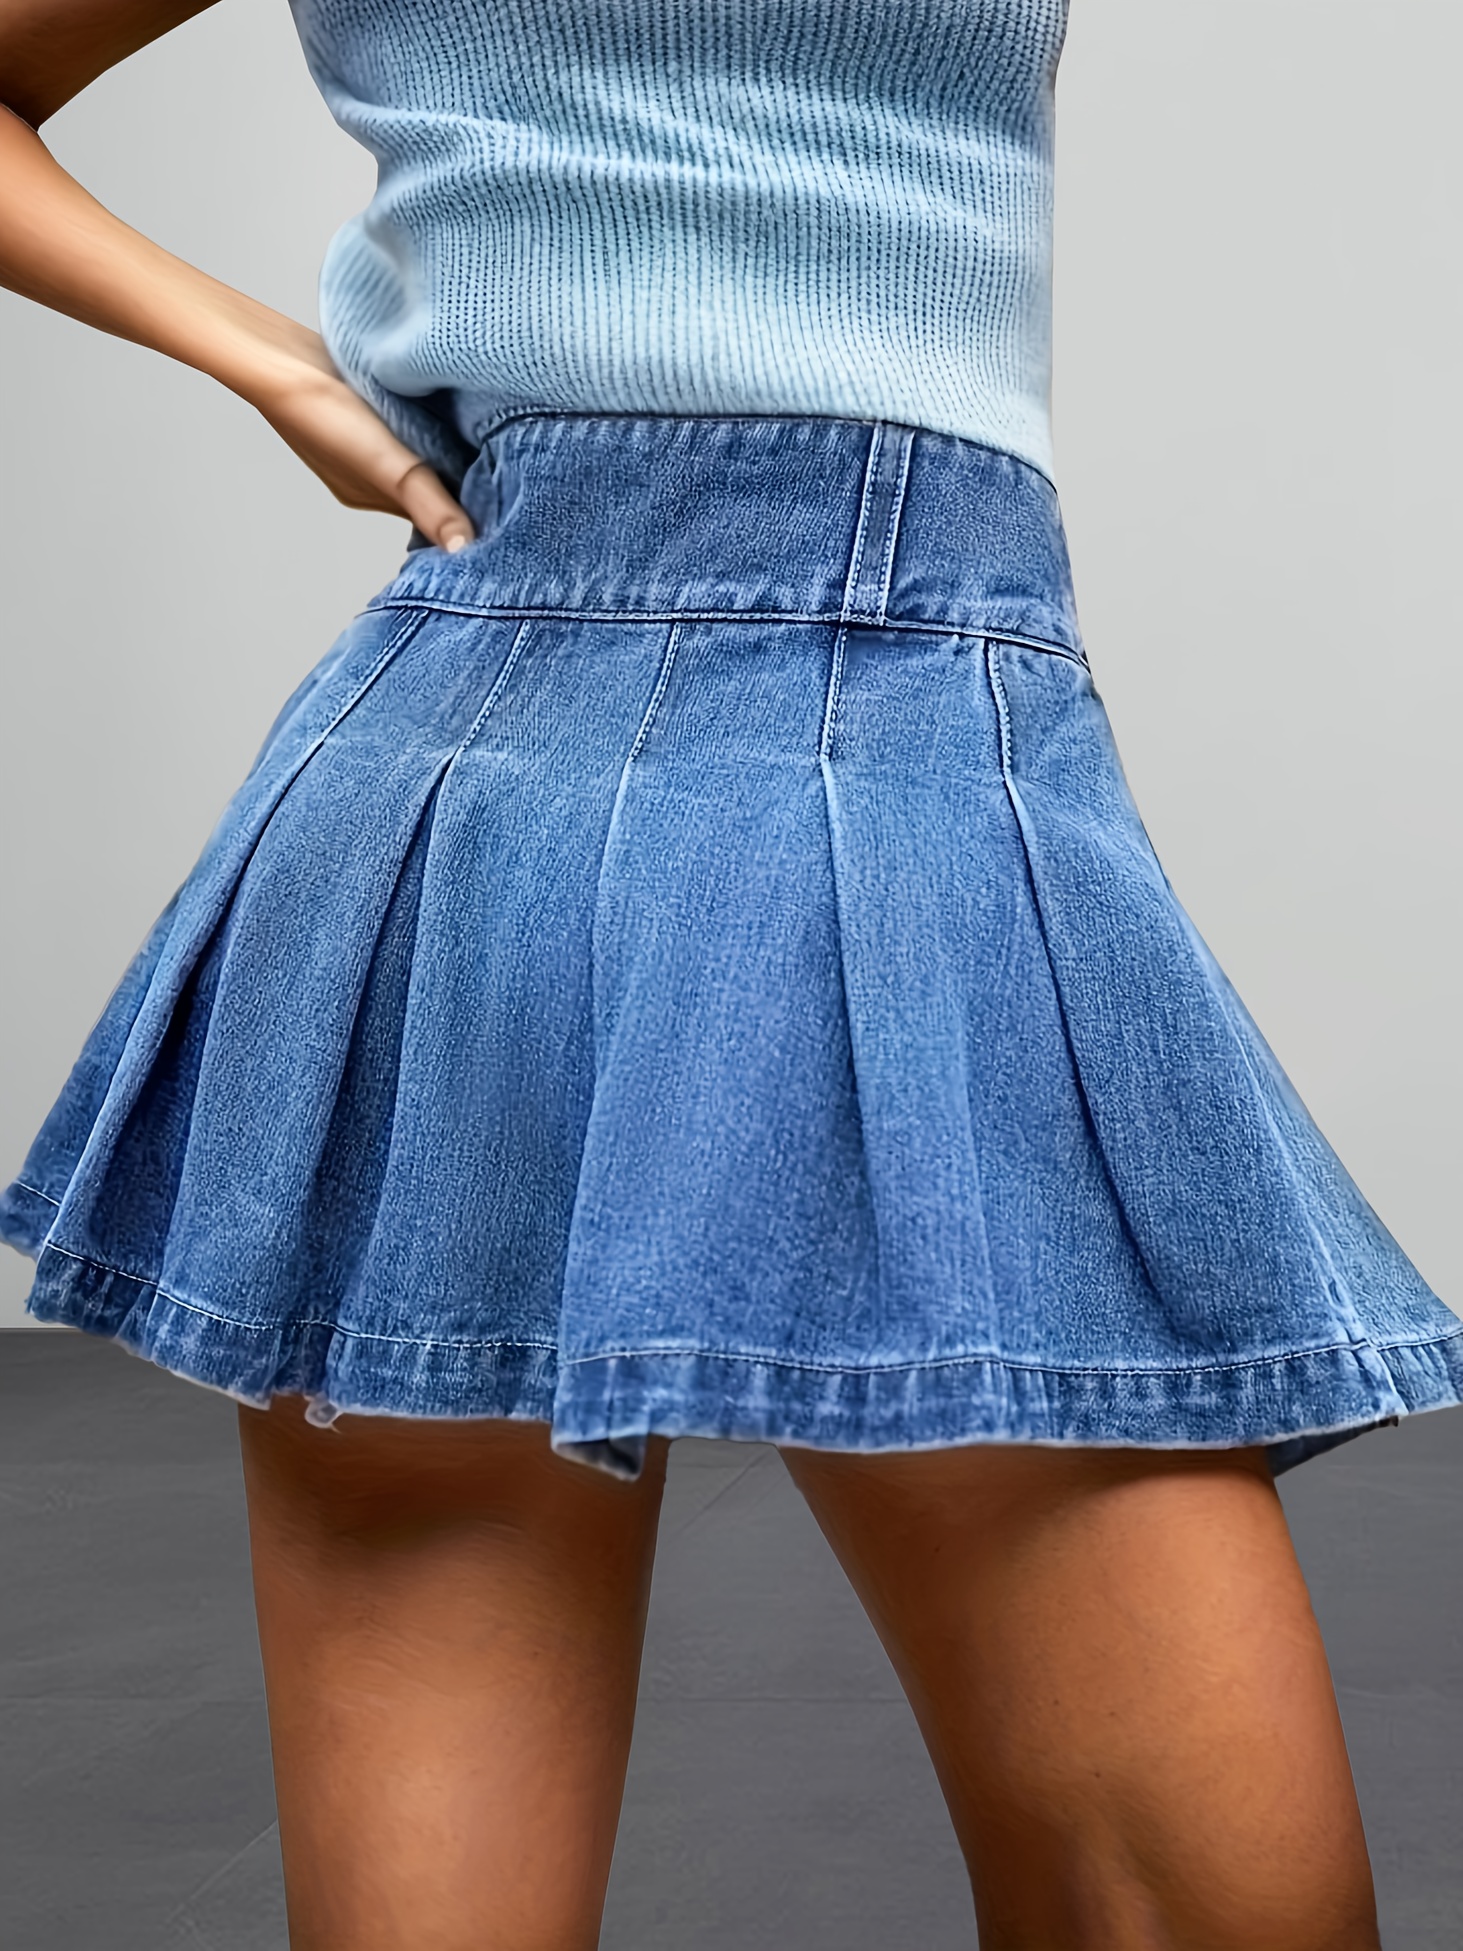 Jen Skirt - Blue Delft Cotton - Men's Clothing, Traditional Natural  shouldered clothing, preppy apparel